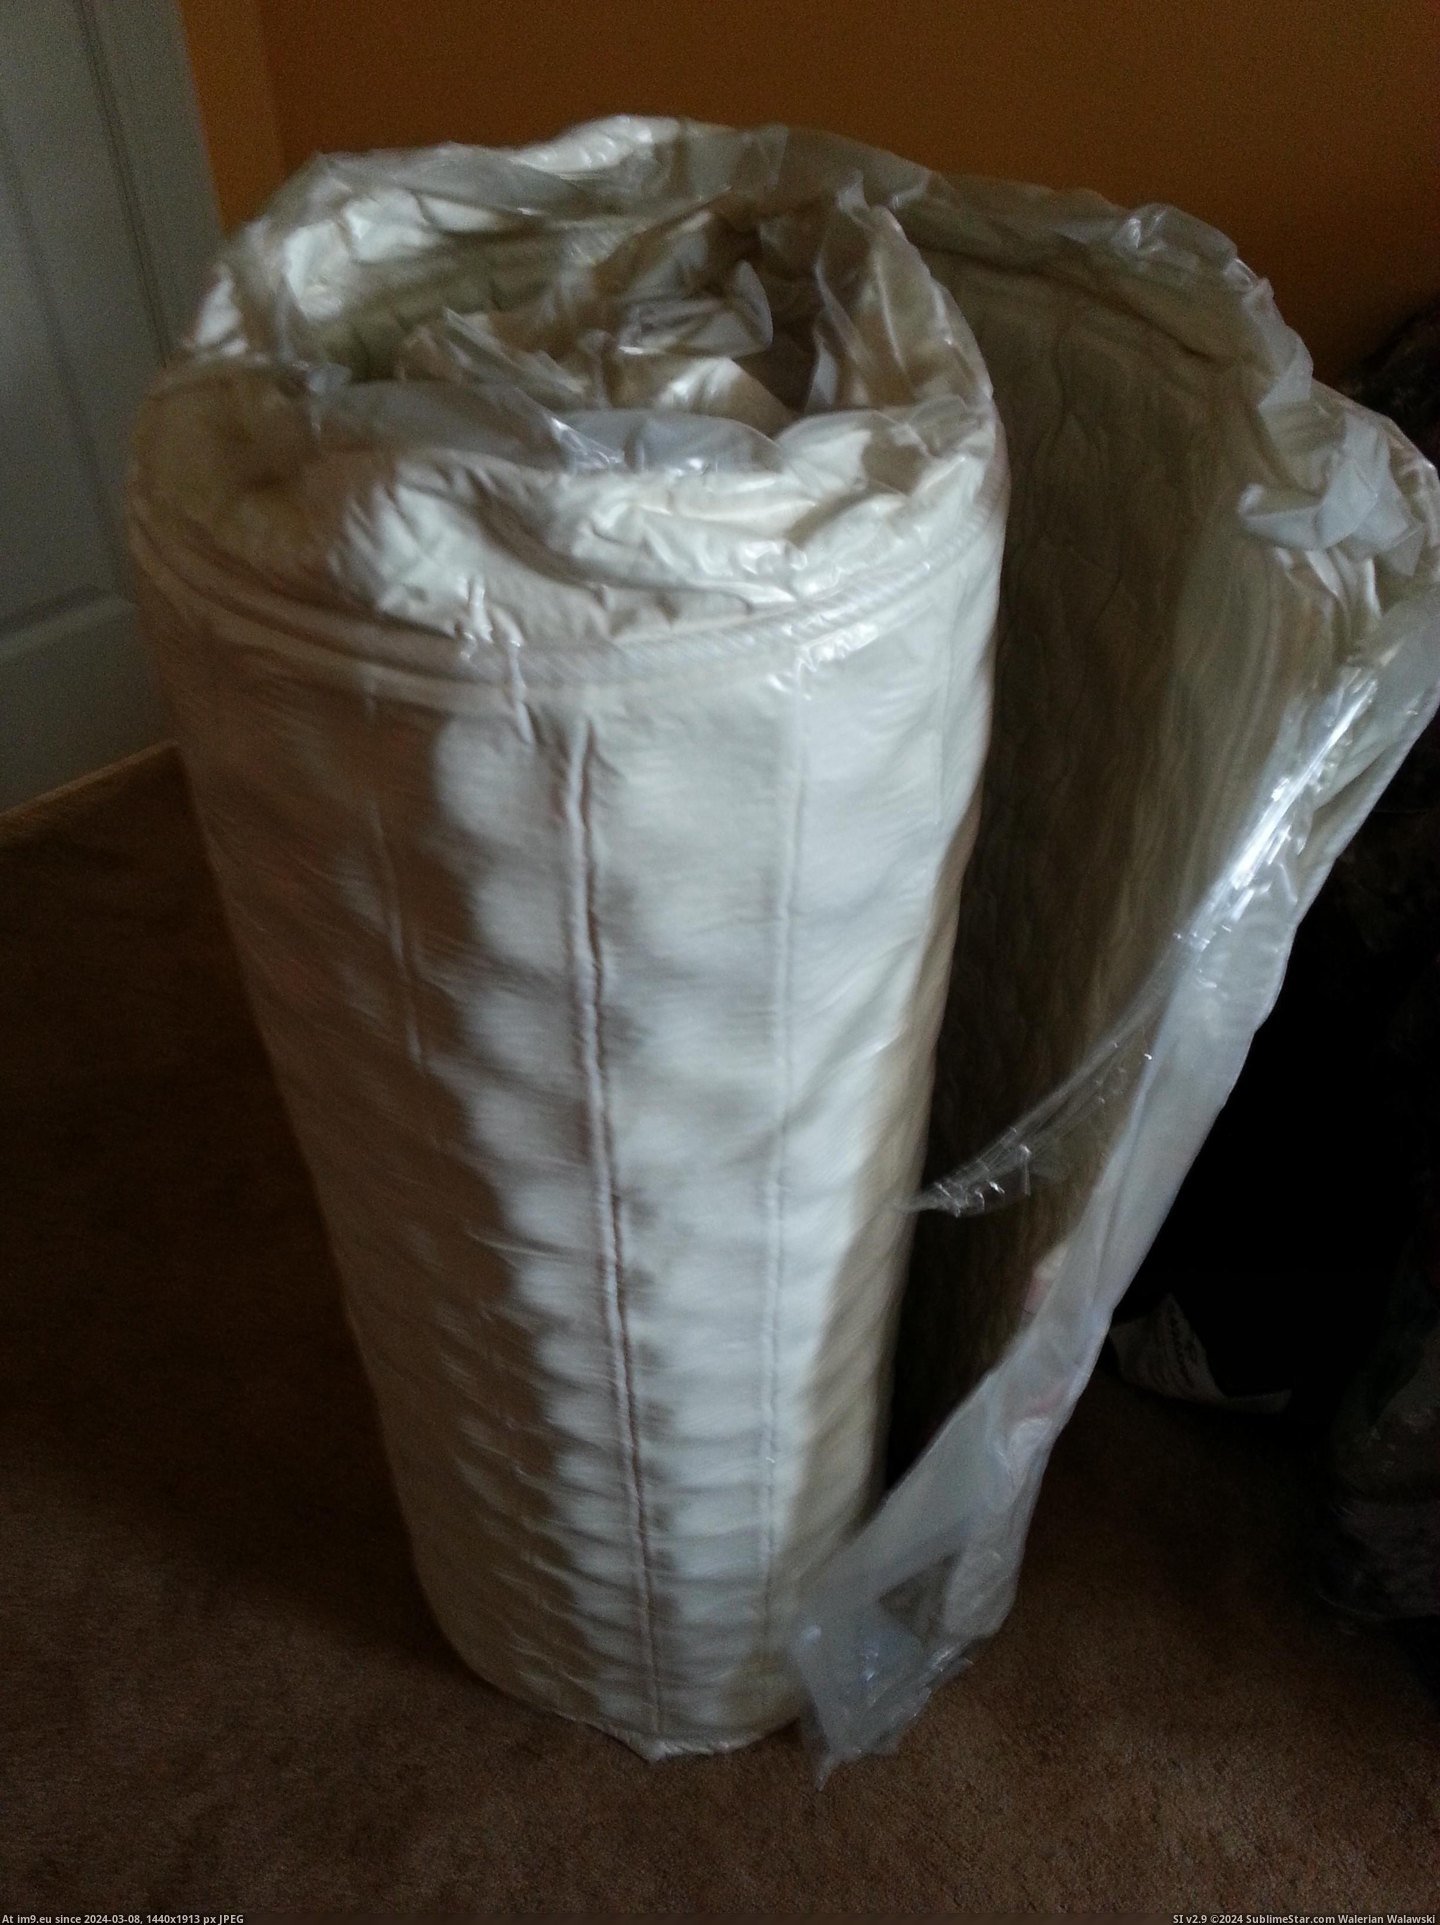 #Broke #Bag #Vacuum #Duffle #Unrolled #Seal #Mattress [Mildlyinteresting] Got a mattress in a duffle bag today, unrolled it and broke the vacuum seal 2 Pic. (Image of album My r/MILDLYINTERESTING favs))